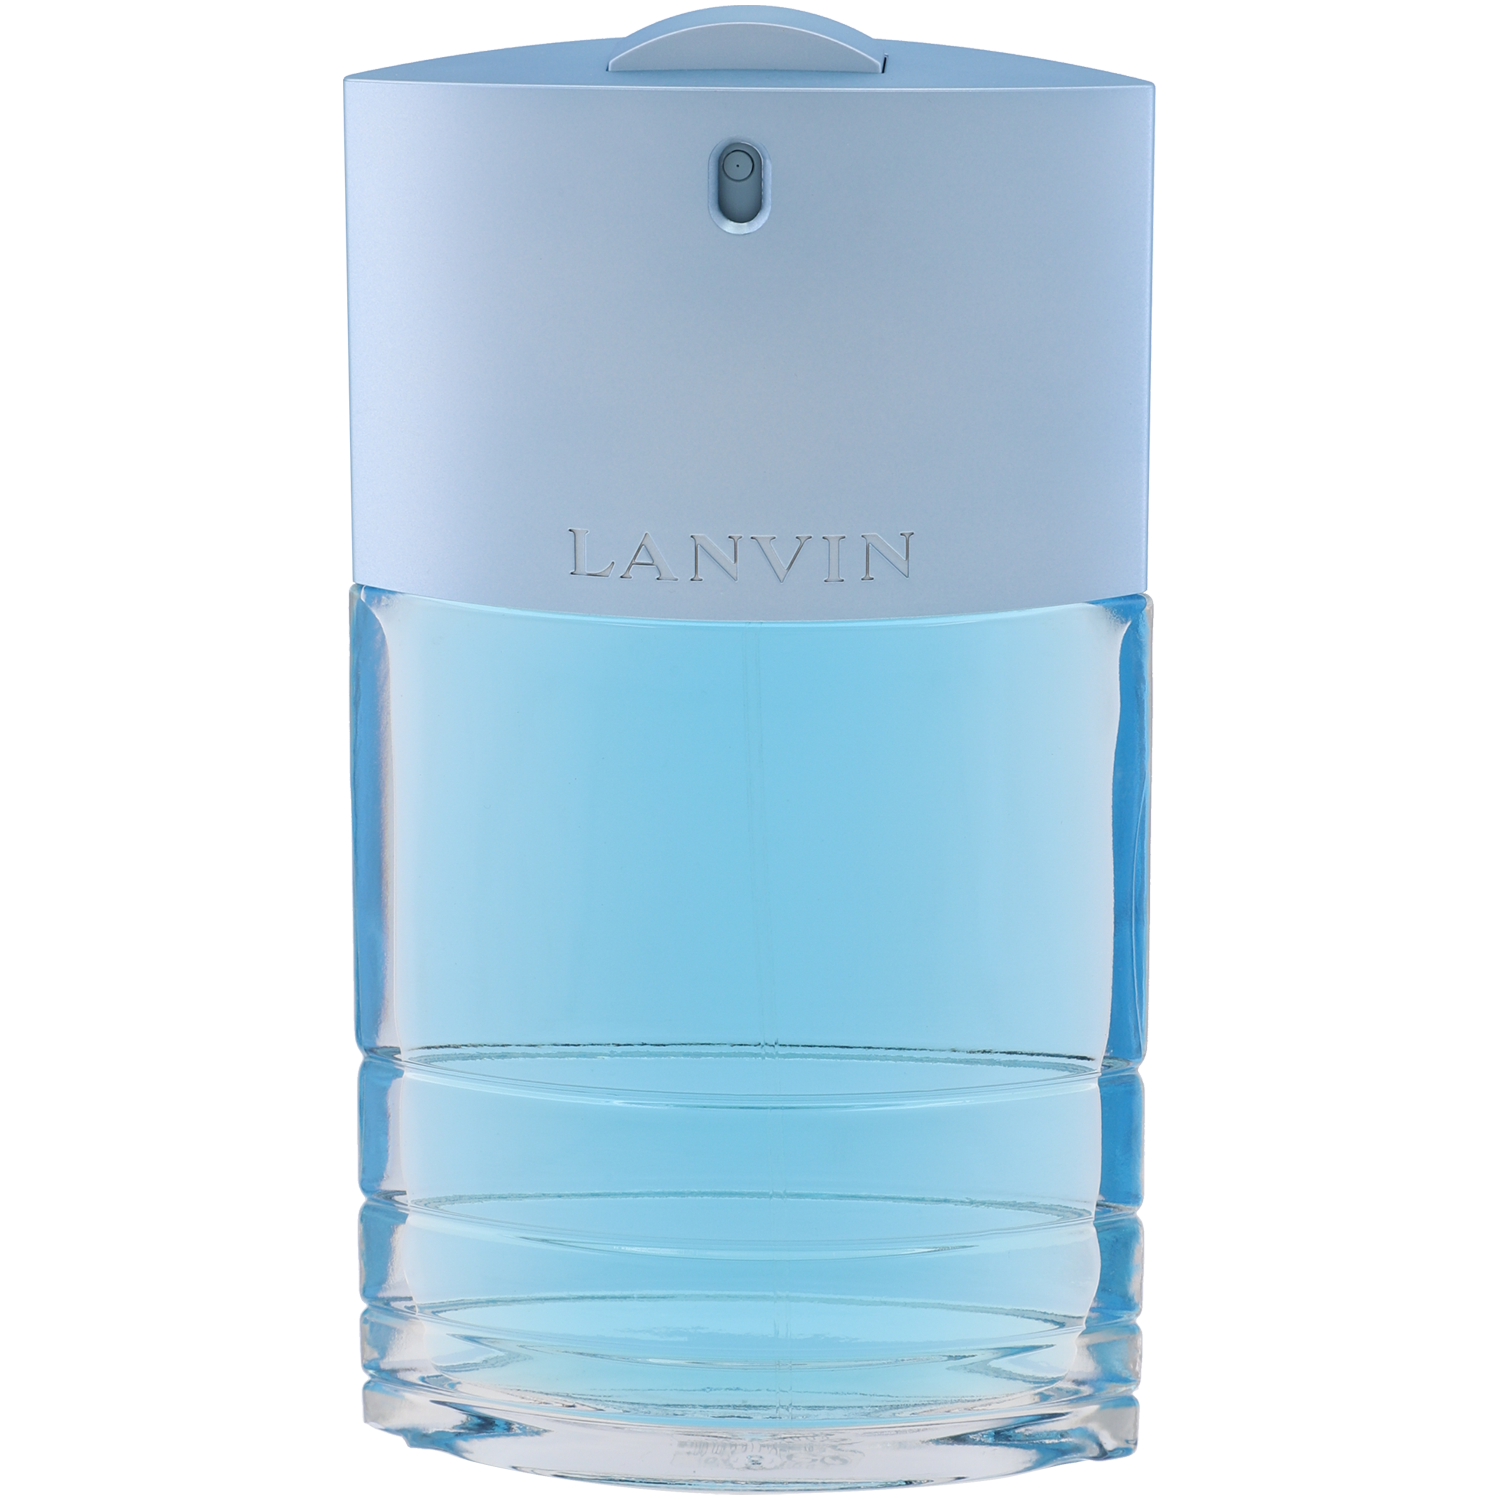 Lanvin Oxygene Homme туалетная вода для мужчин, 100 мл jarre jeanmichel oxygene 713 oxygene sequel ii jewelbox cd